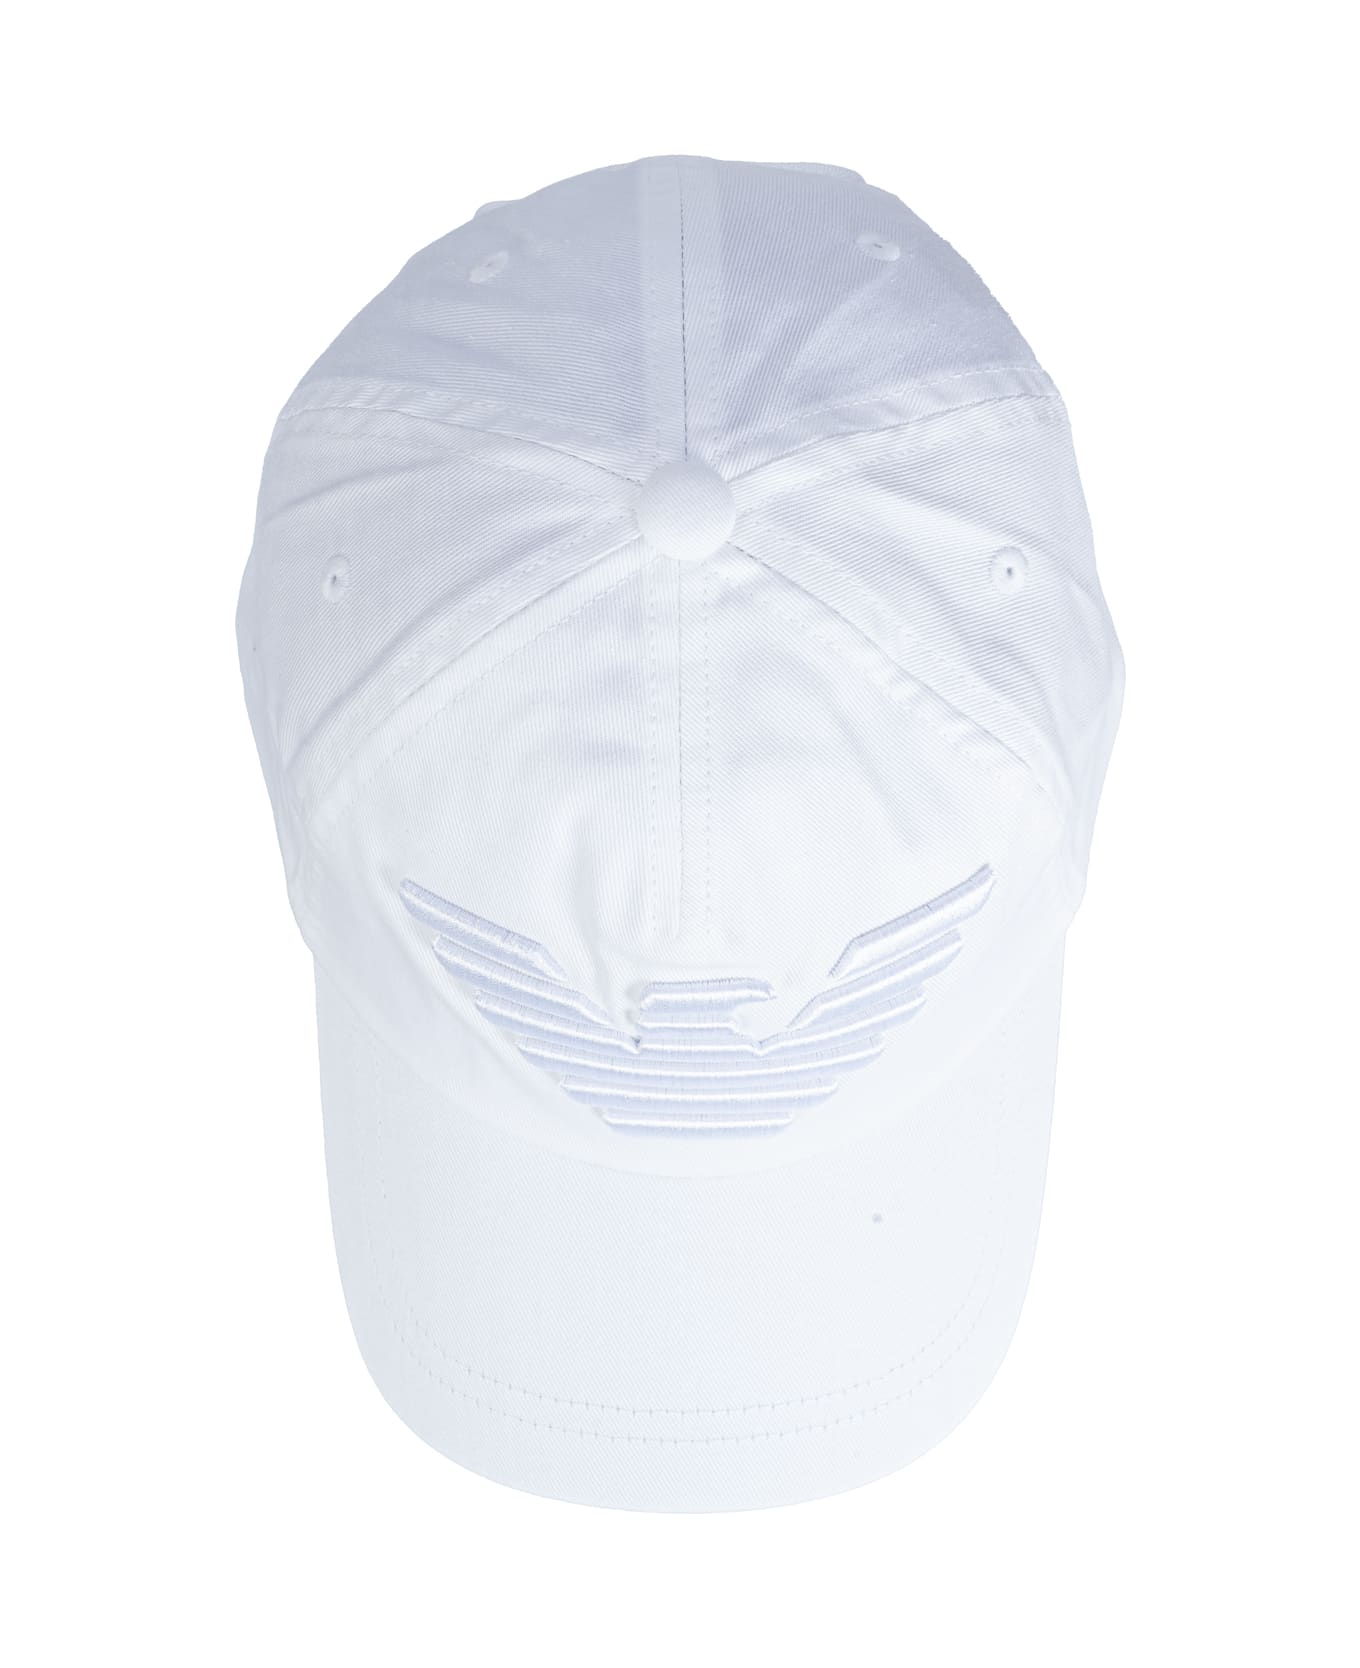 Emporio Armani Hats White - White